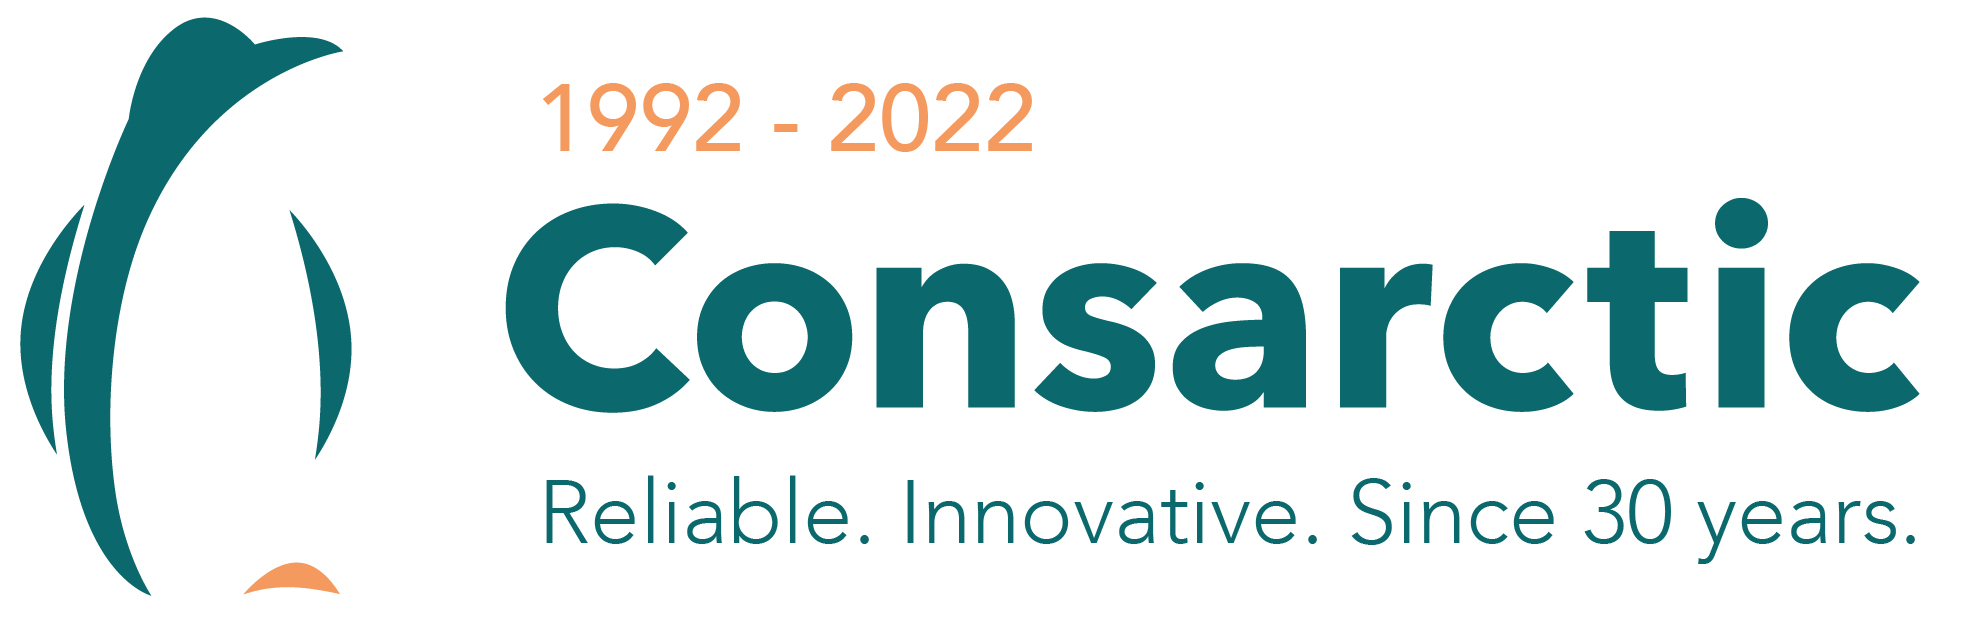 Consarctic GmbH logo